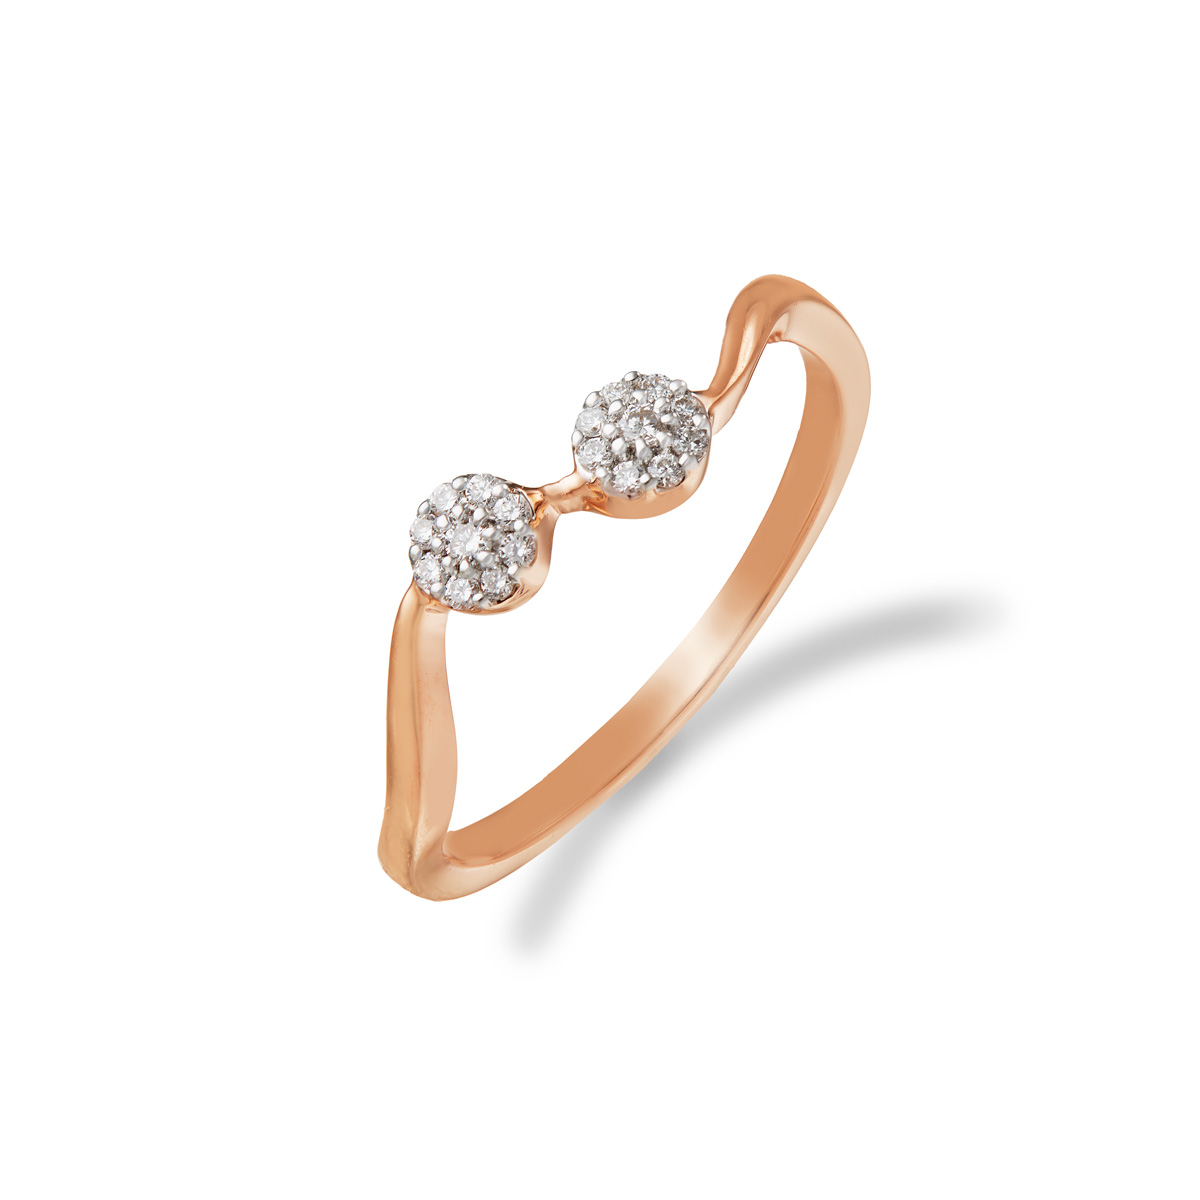 Floret diamond ring